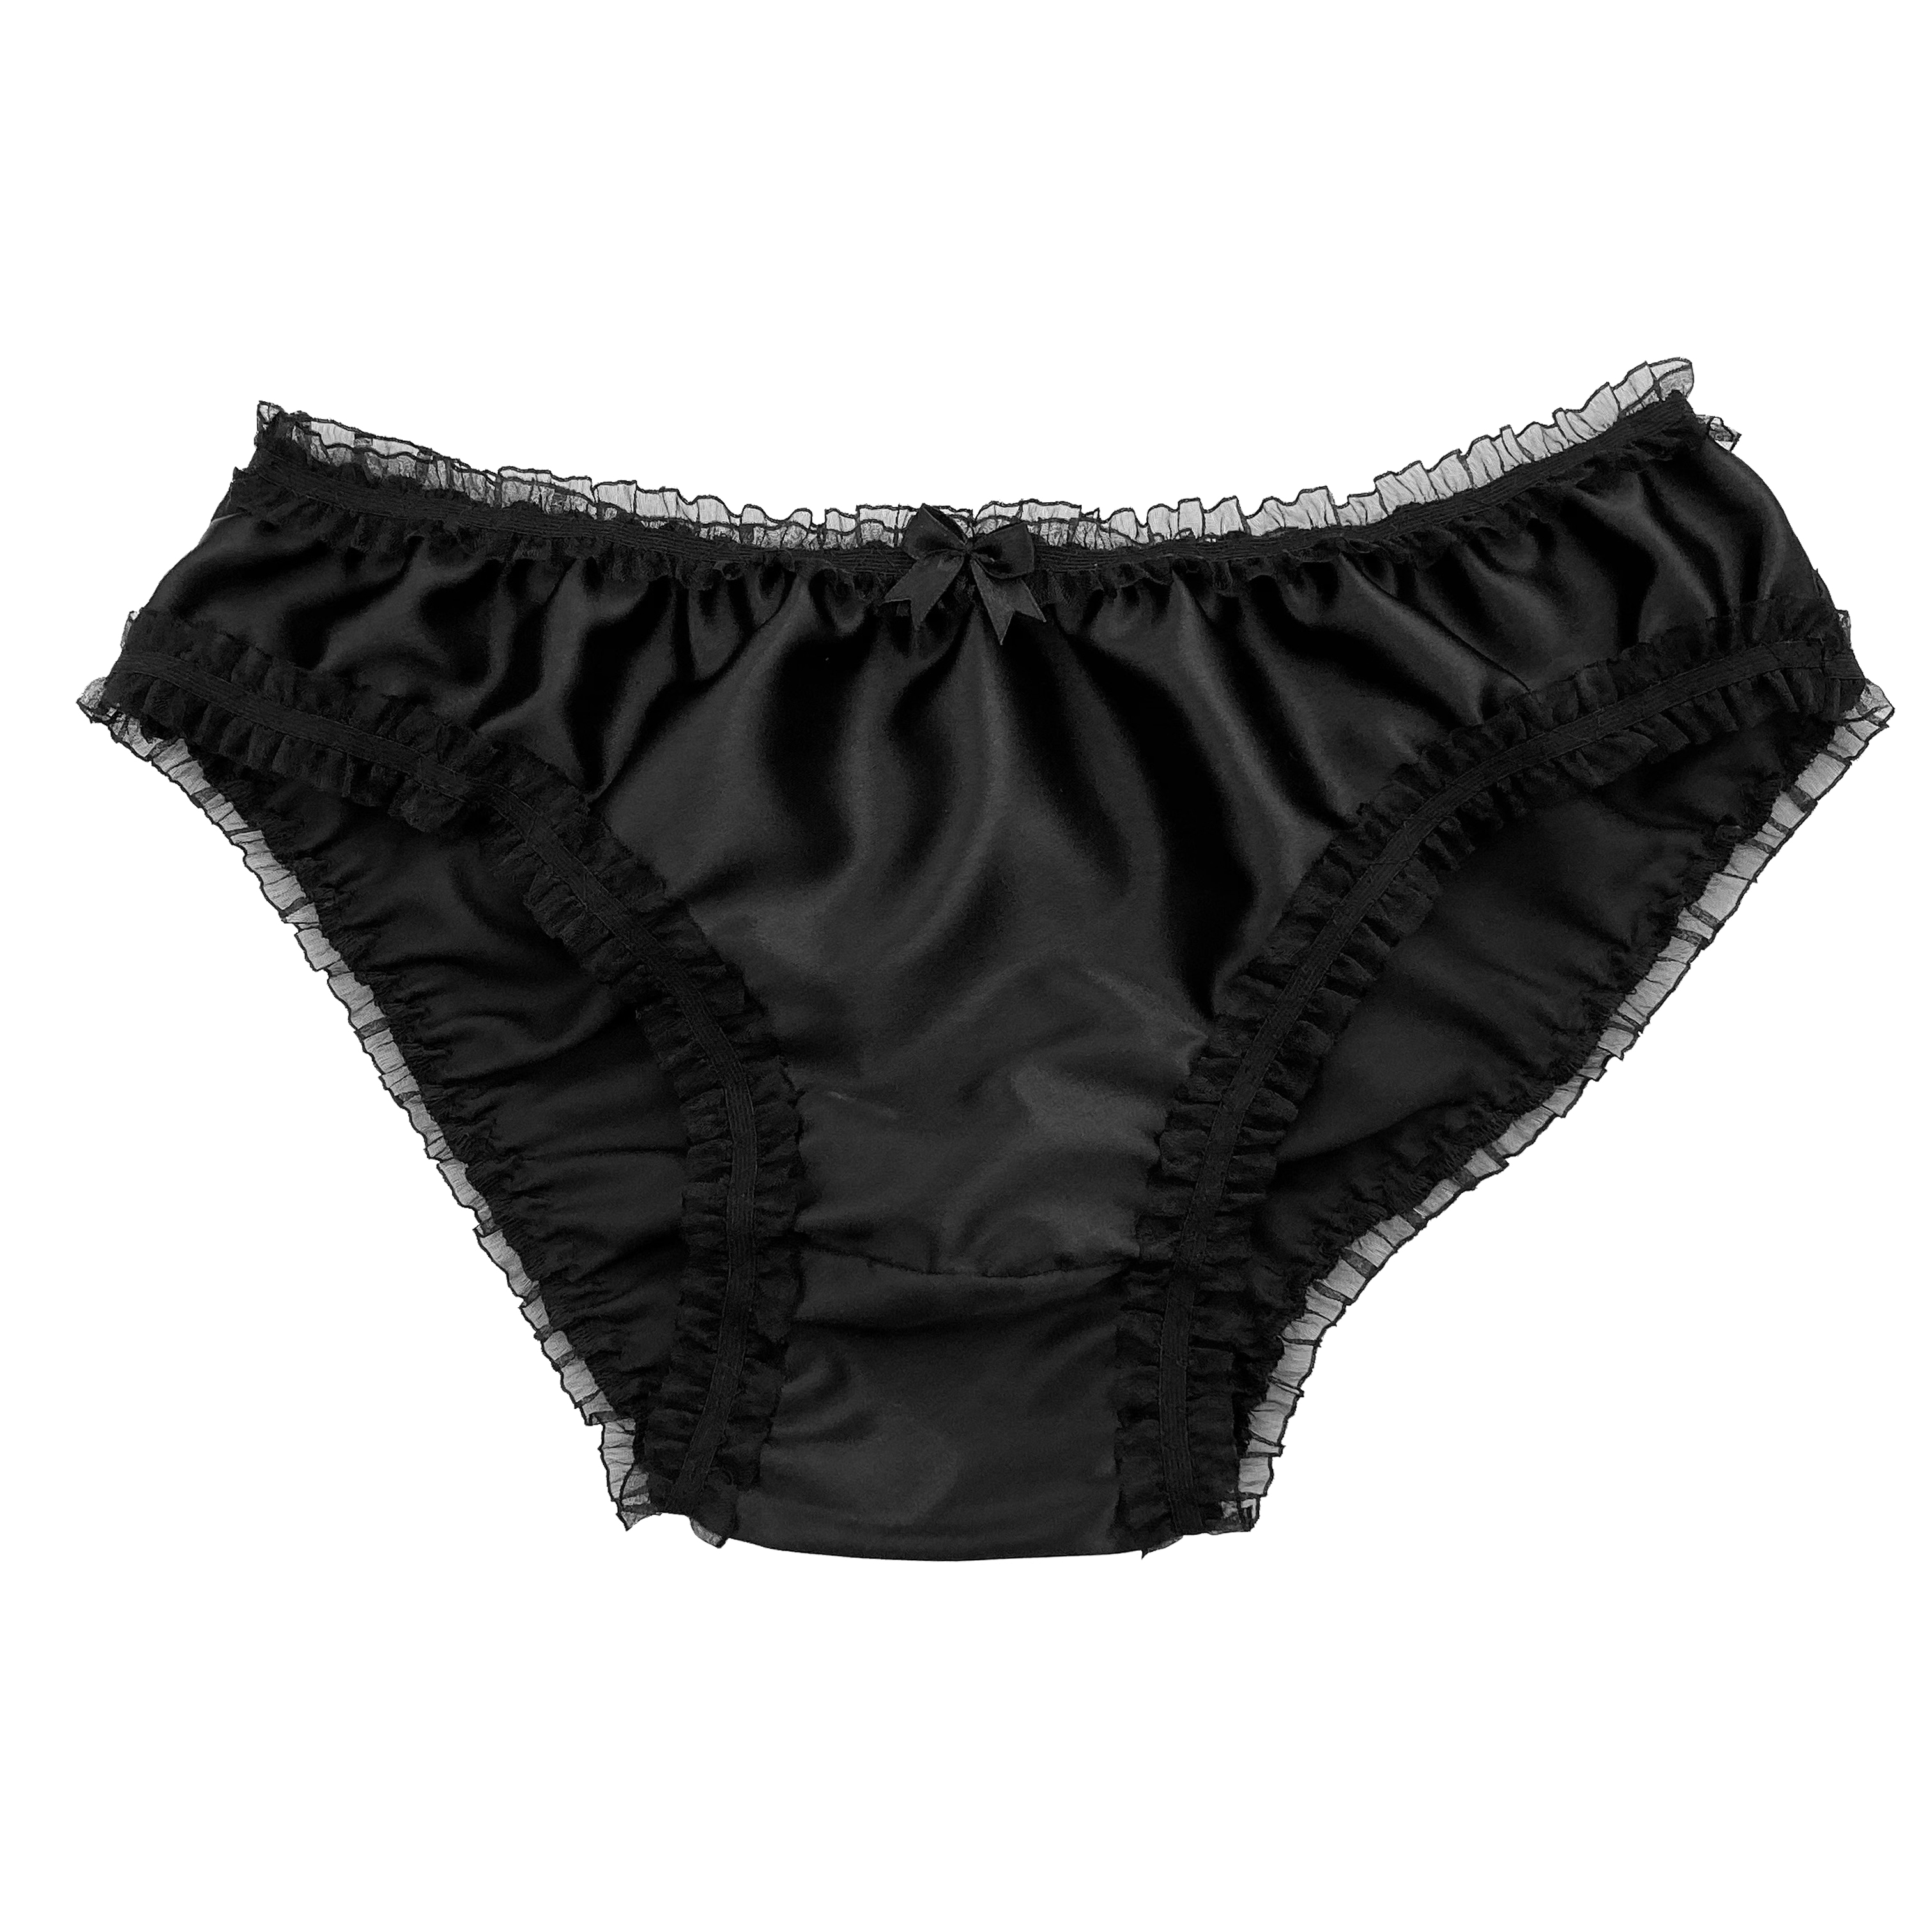 Black Satin Silky Lace Sissy Panties Bikini Briefs Knicke